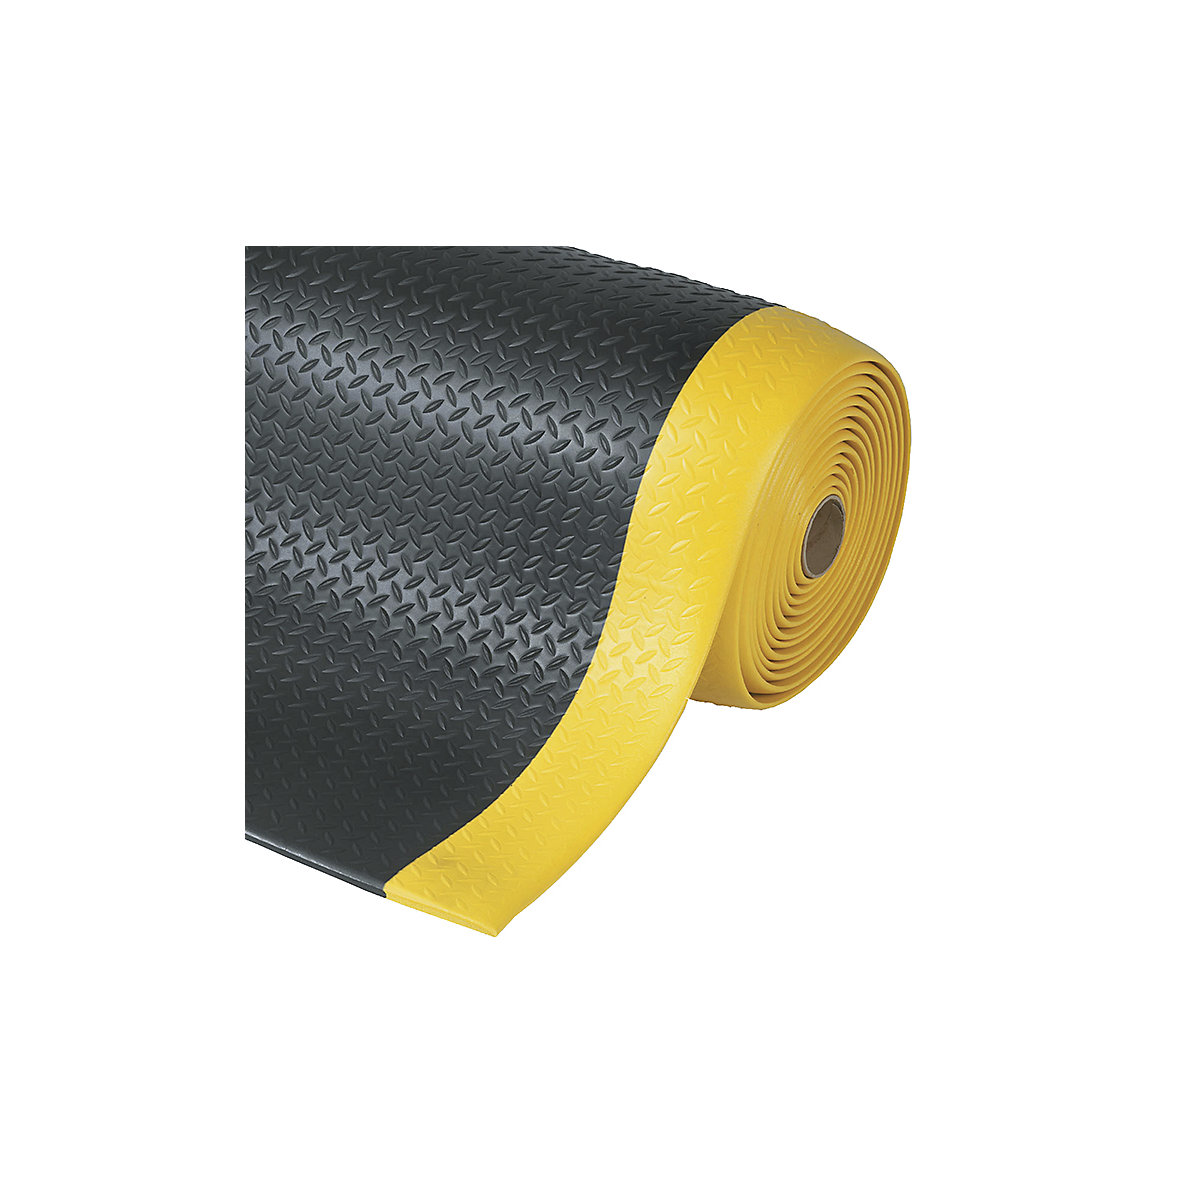 Werkplaatsmat, Diamond Sof-Tred™ – NOTRAX, breedte 910 mm, per str. m, zwart/geel-4